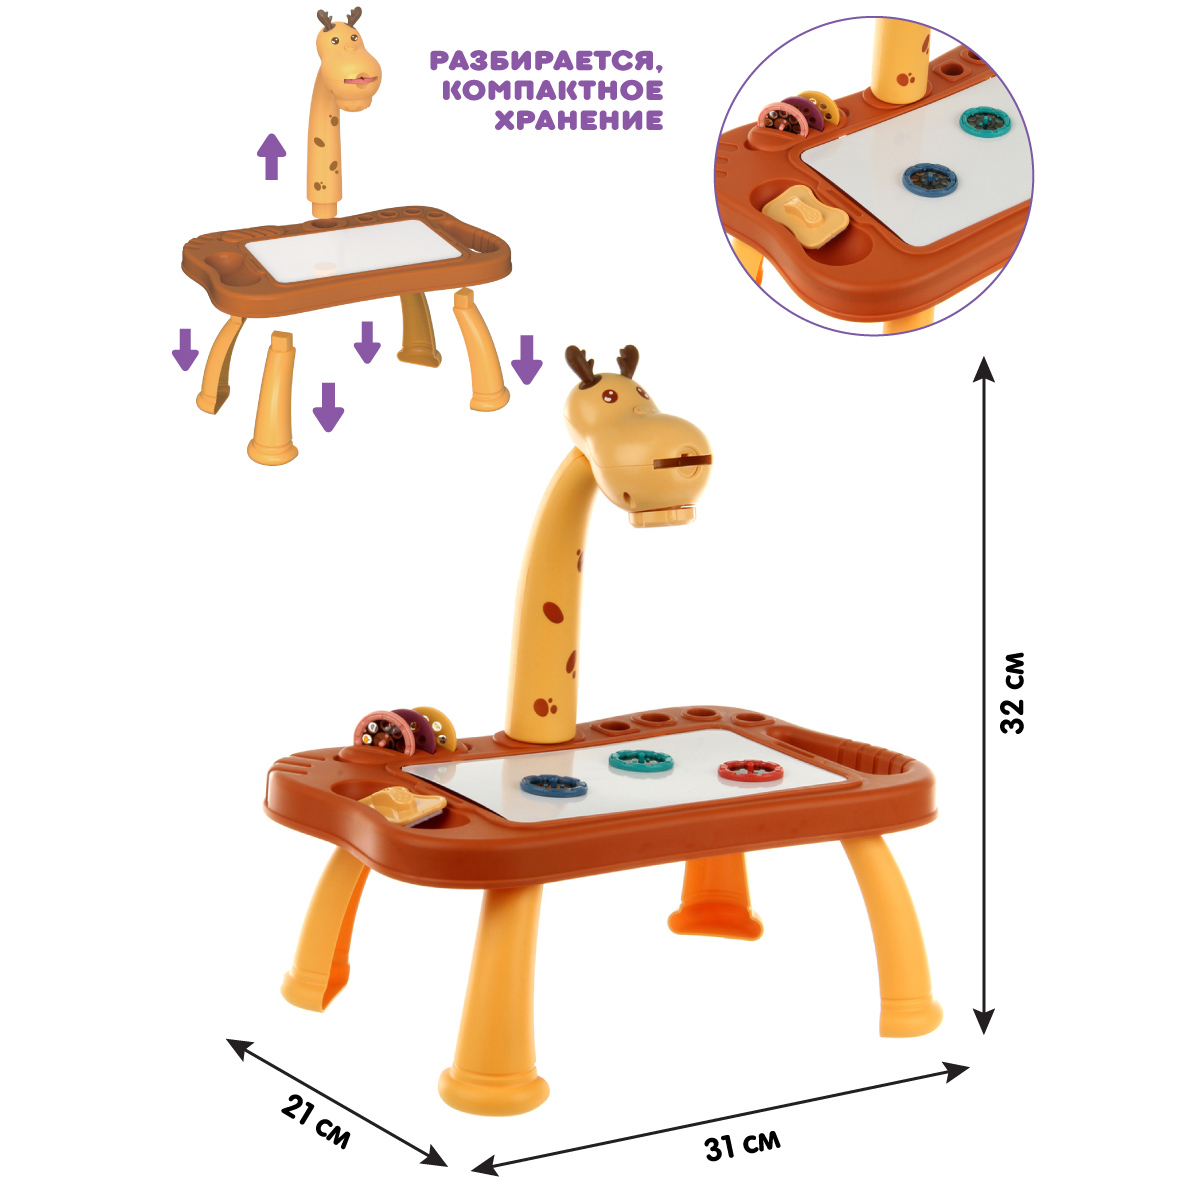 Развивающий столик Ути Пути доска для рисования с проектором Жирафик - фото 2